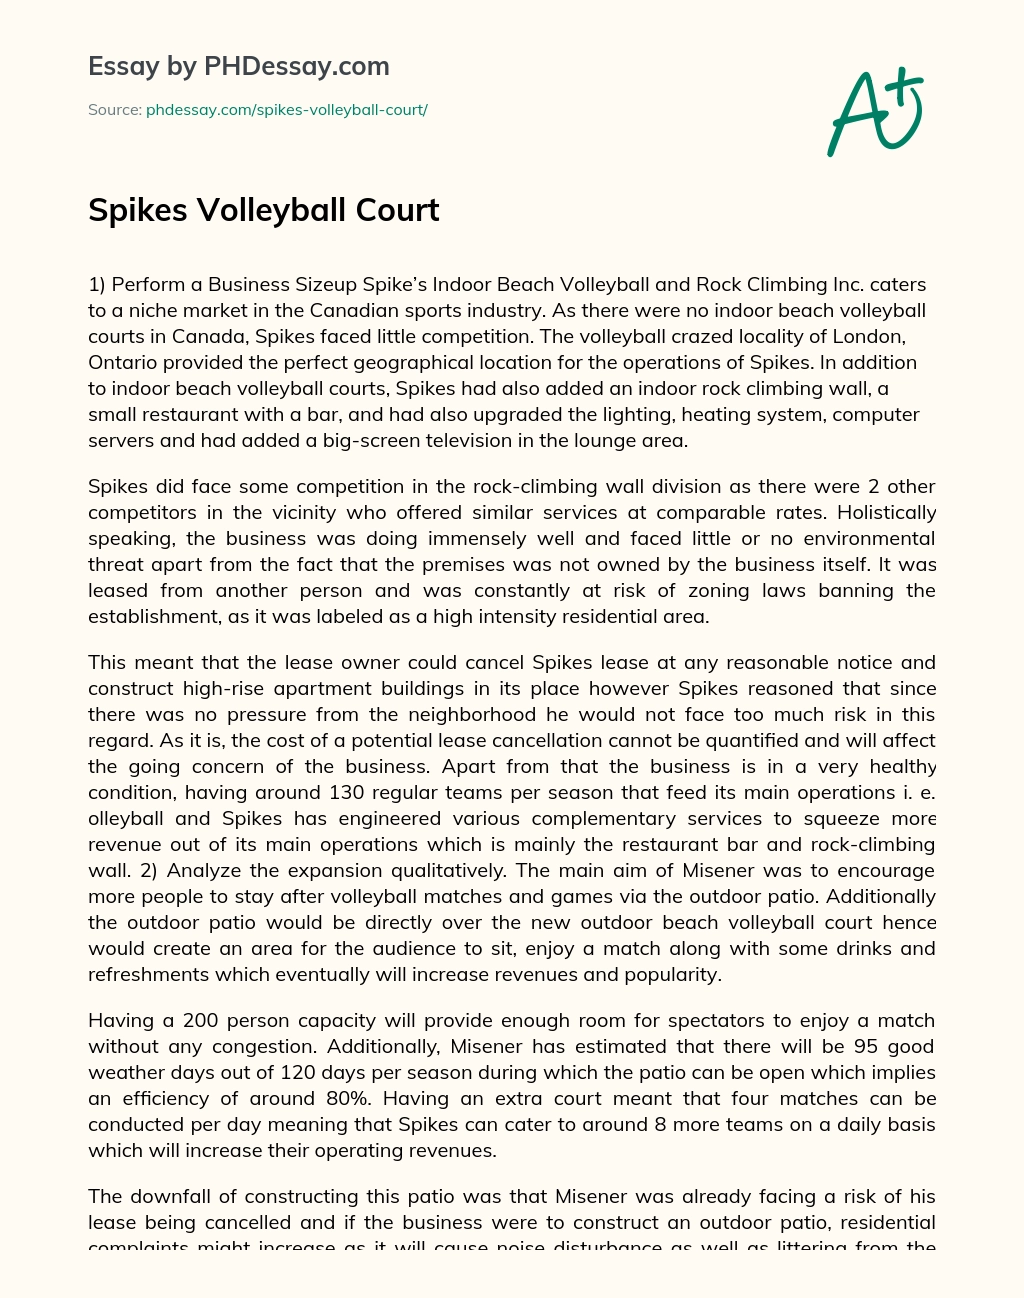 Spikes Volleyball Court essay